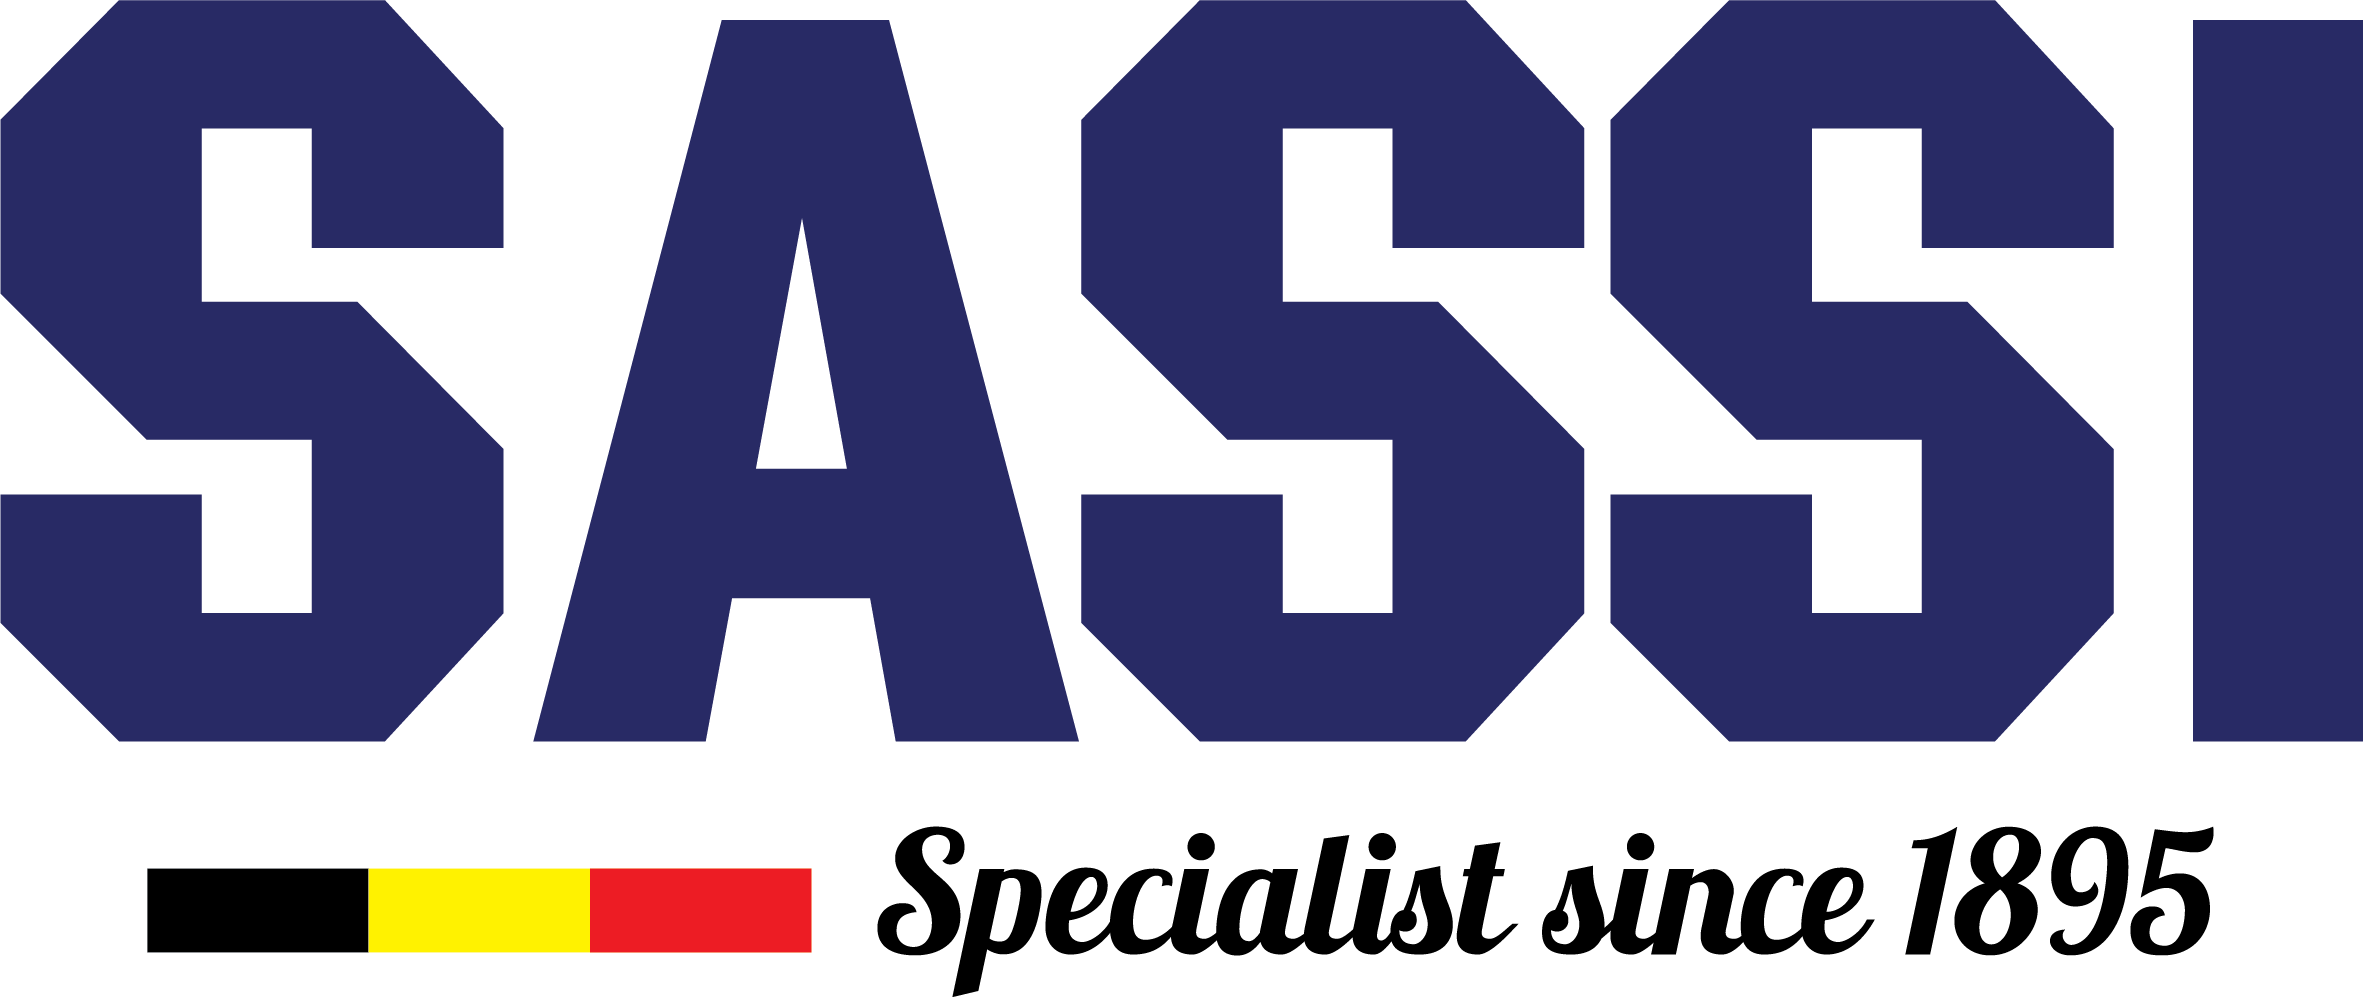 Gamme de produits à la marque Sassi